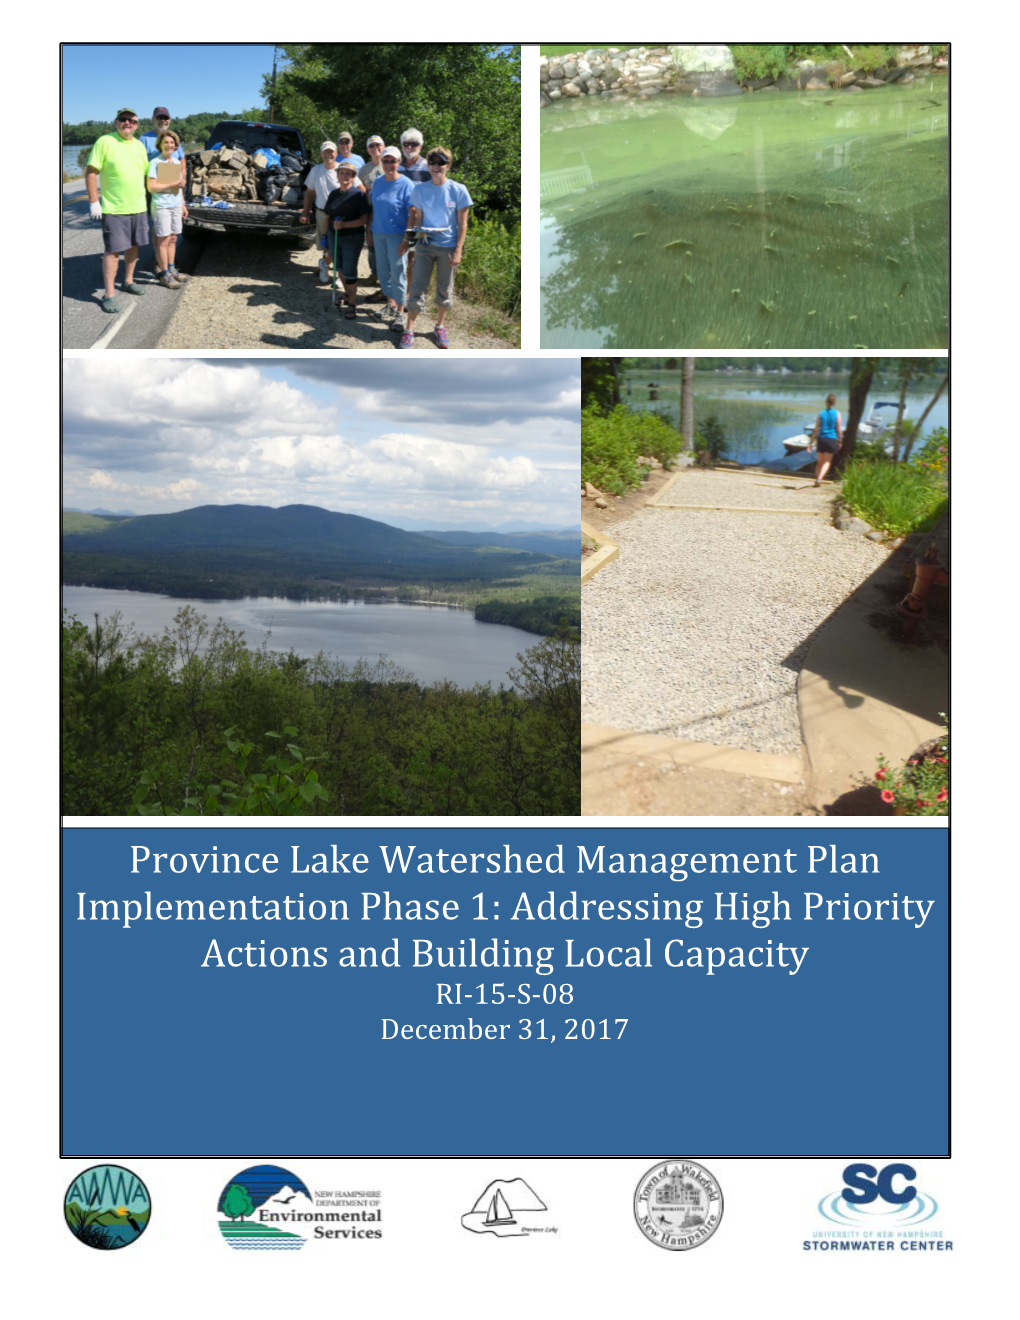 Province Lake Watershed Management Plan Implementation